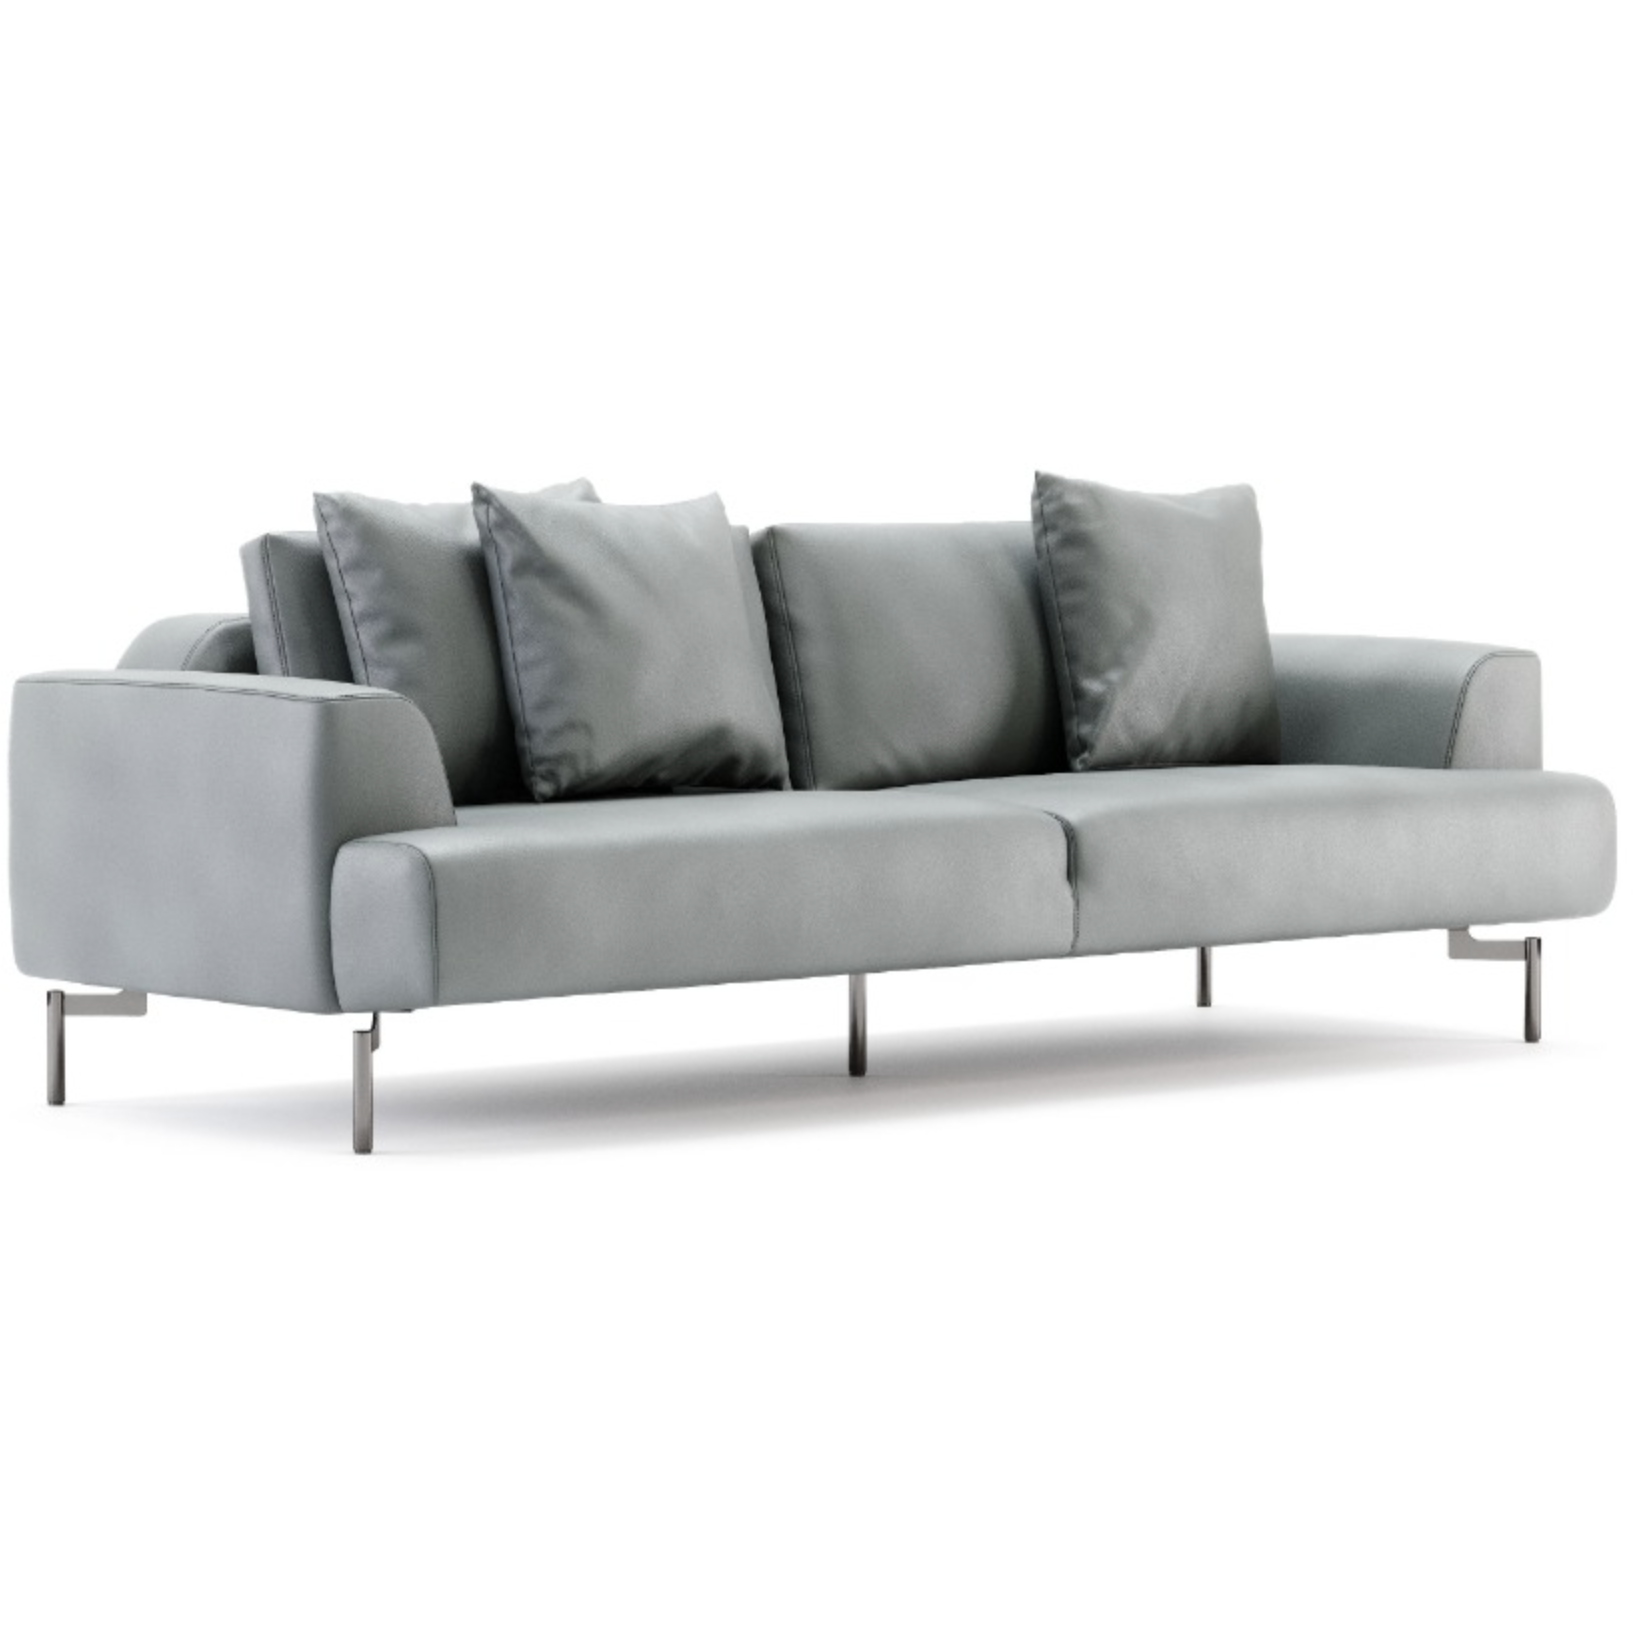 Domkapa Taís 3-Seater Sofa - Customisable | Modern Furniture + Decor